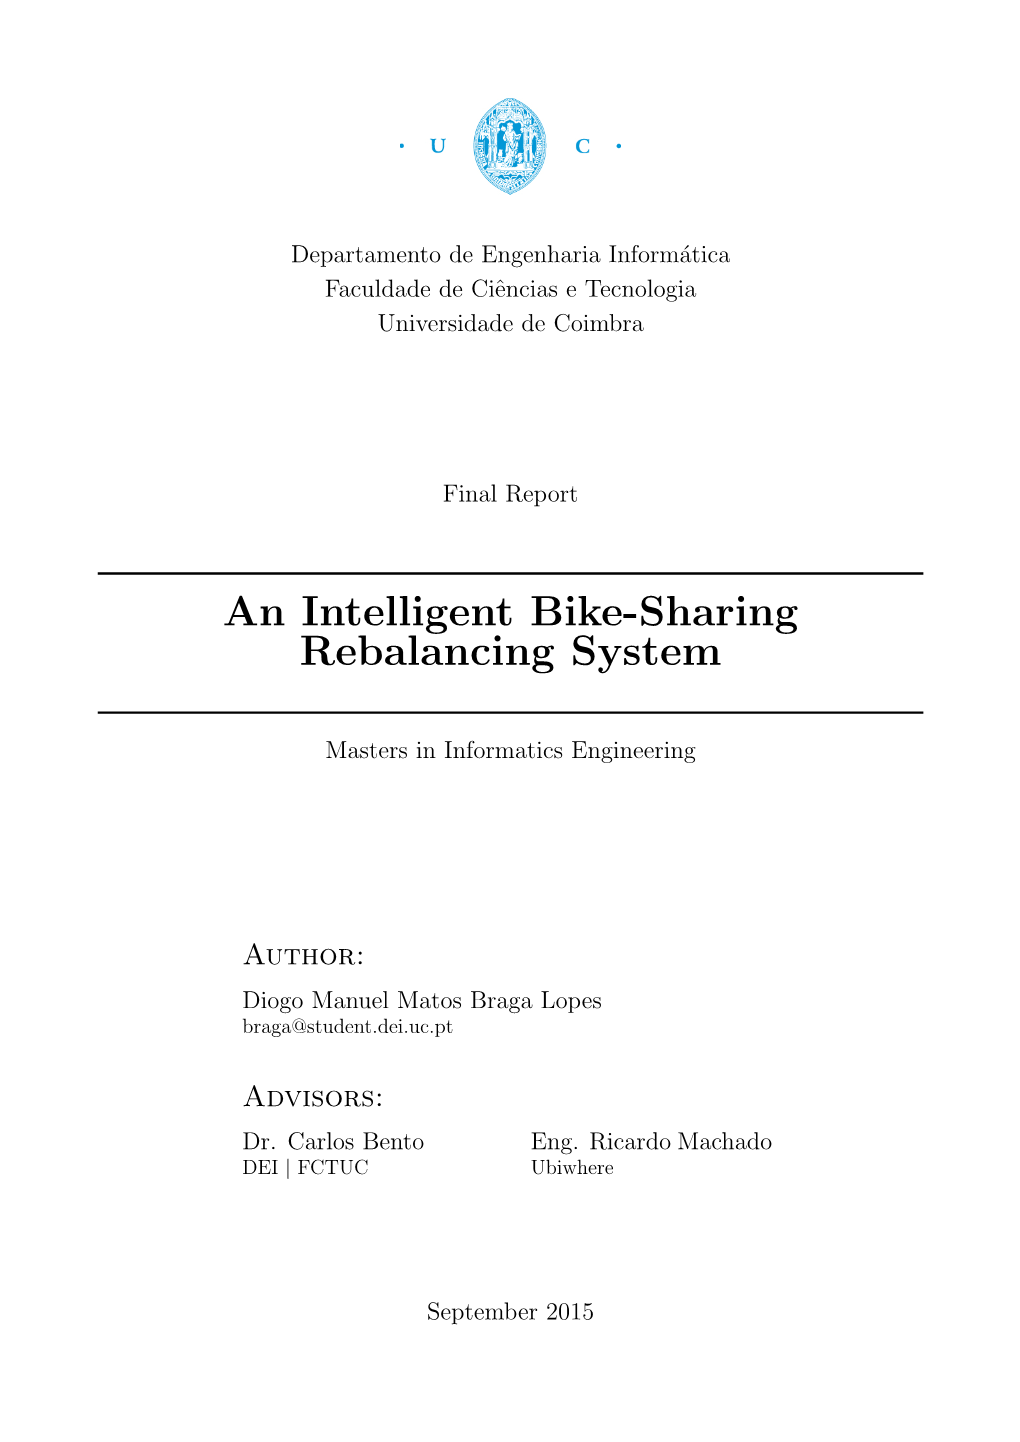 An Intelligent Bike-Sharing Rebalancing System